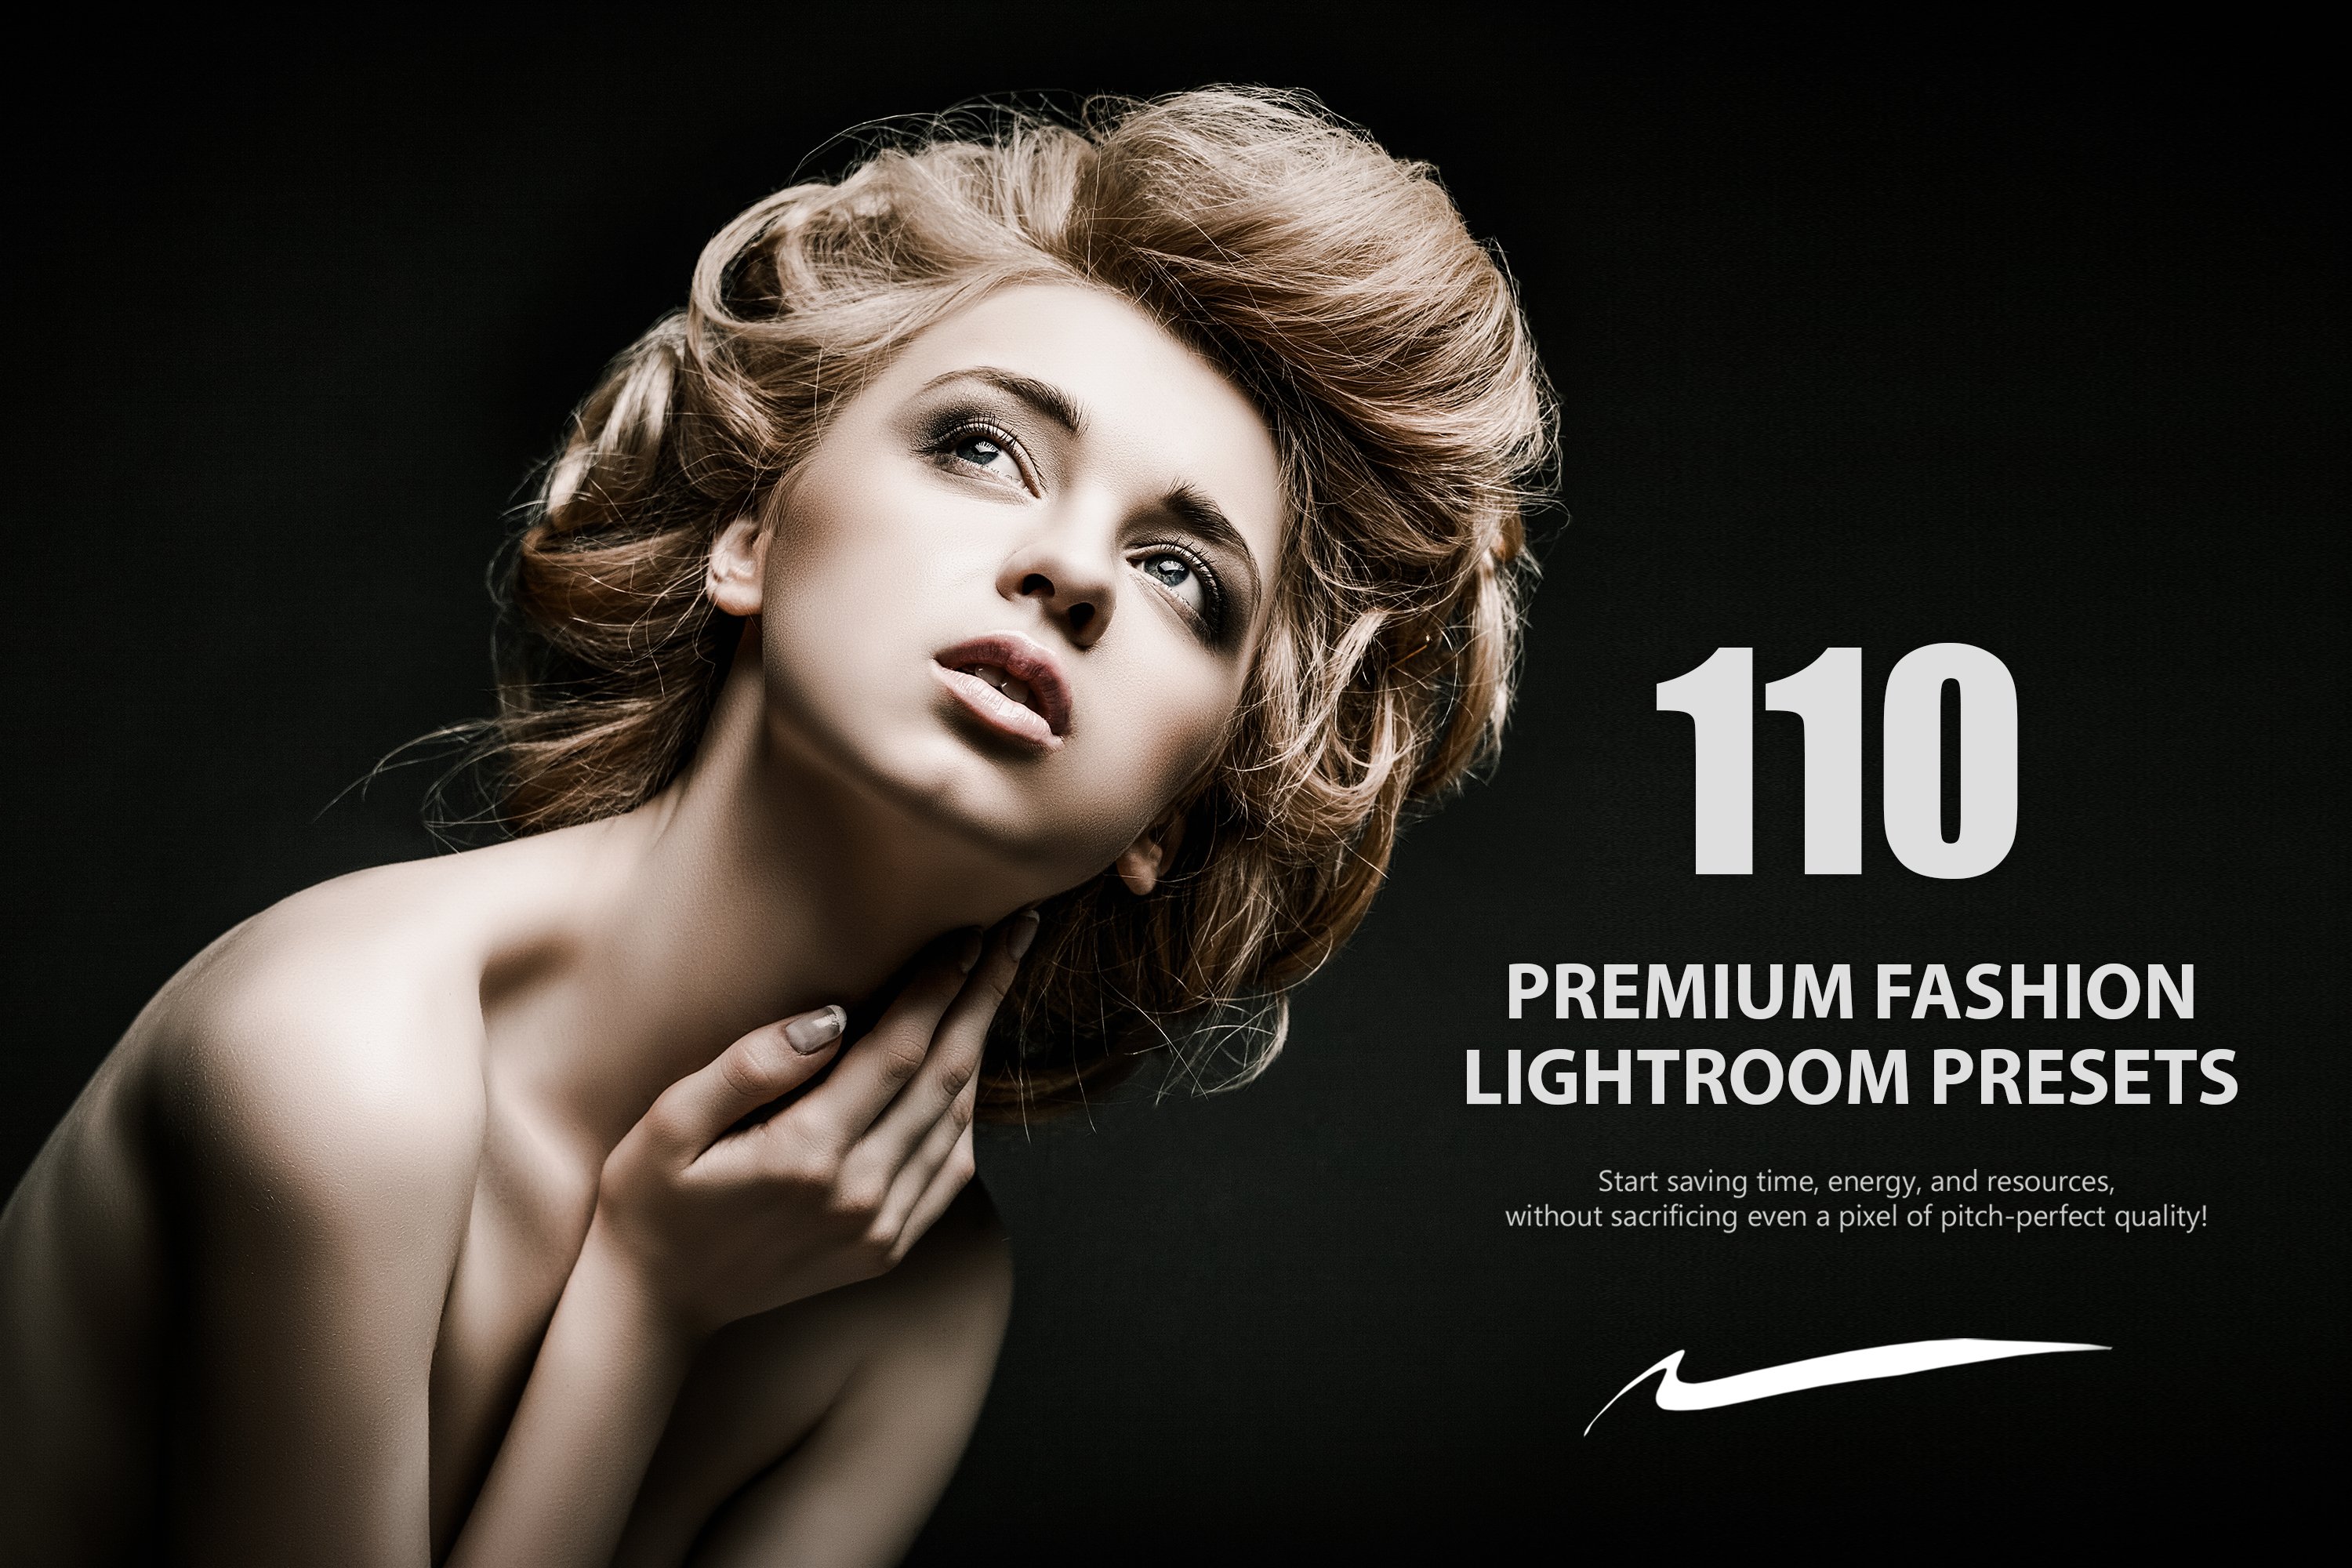 110 Premium Fashion Presetscover image.